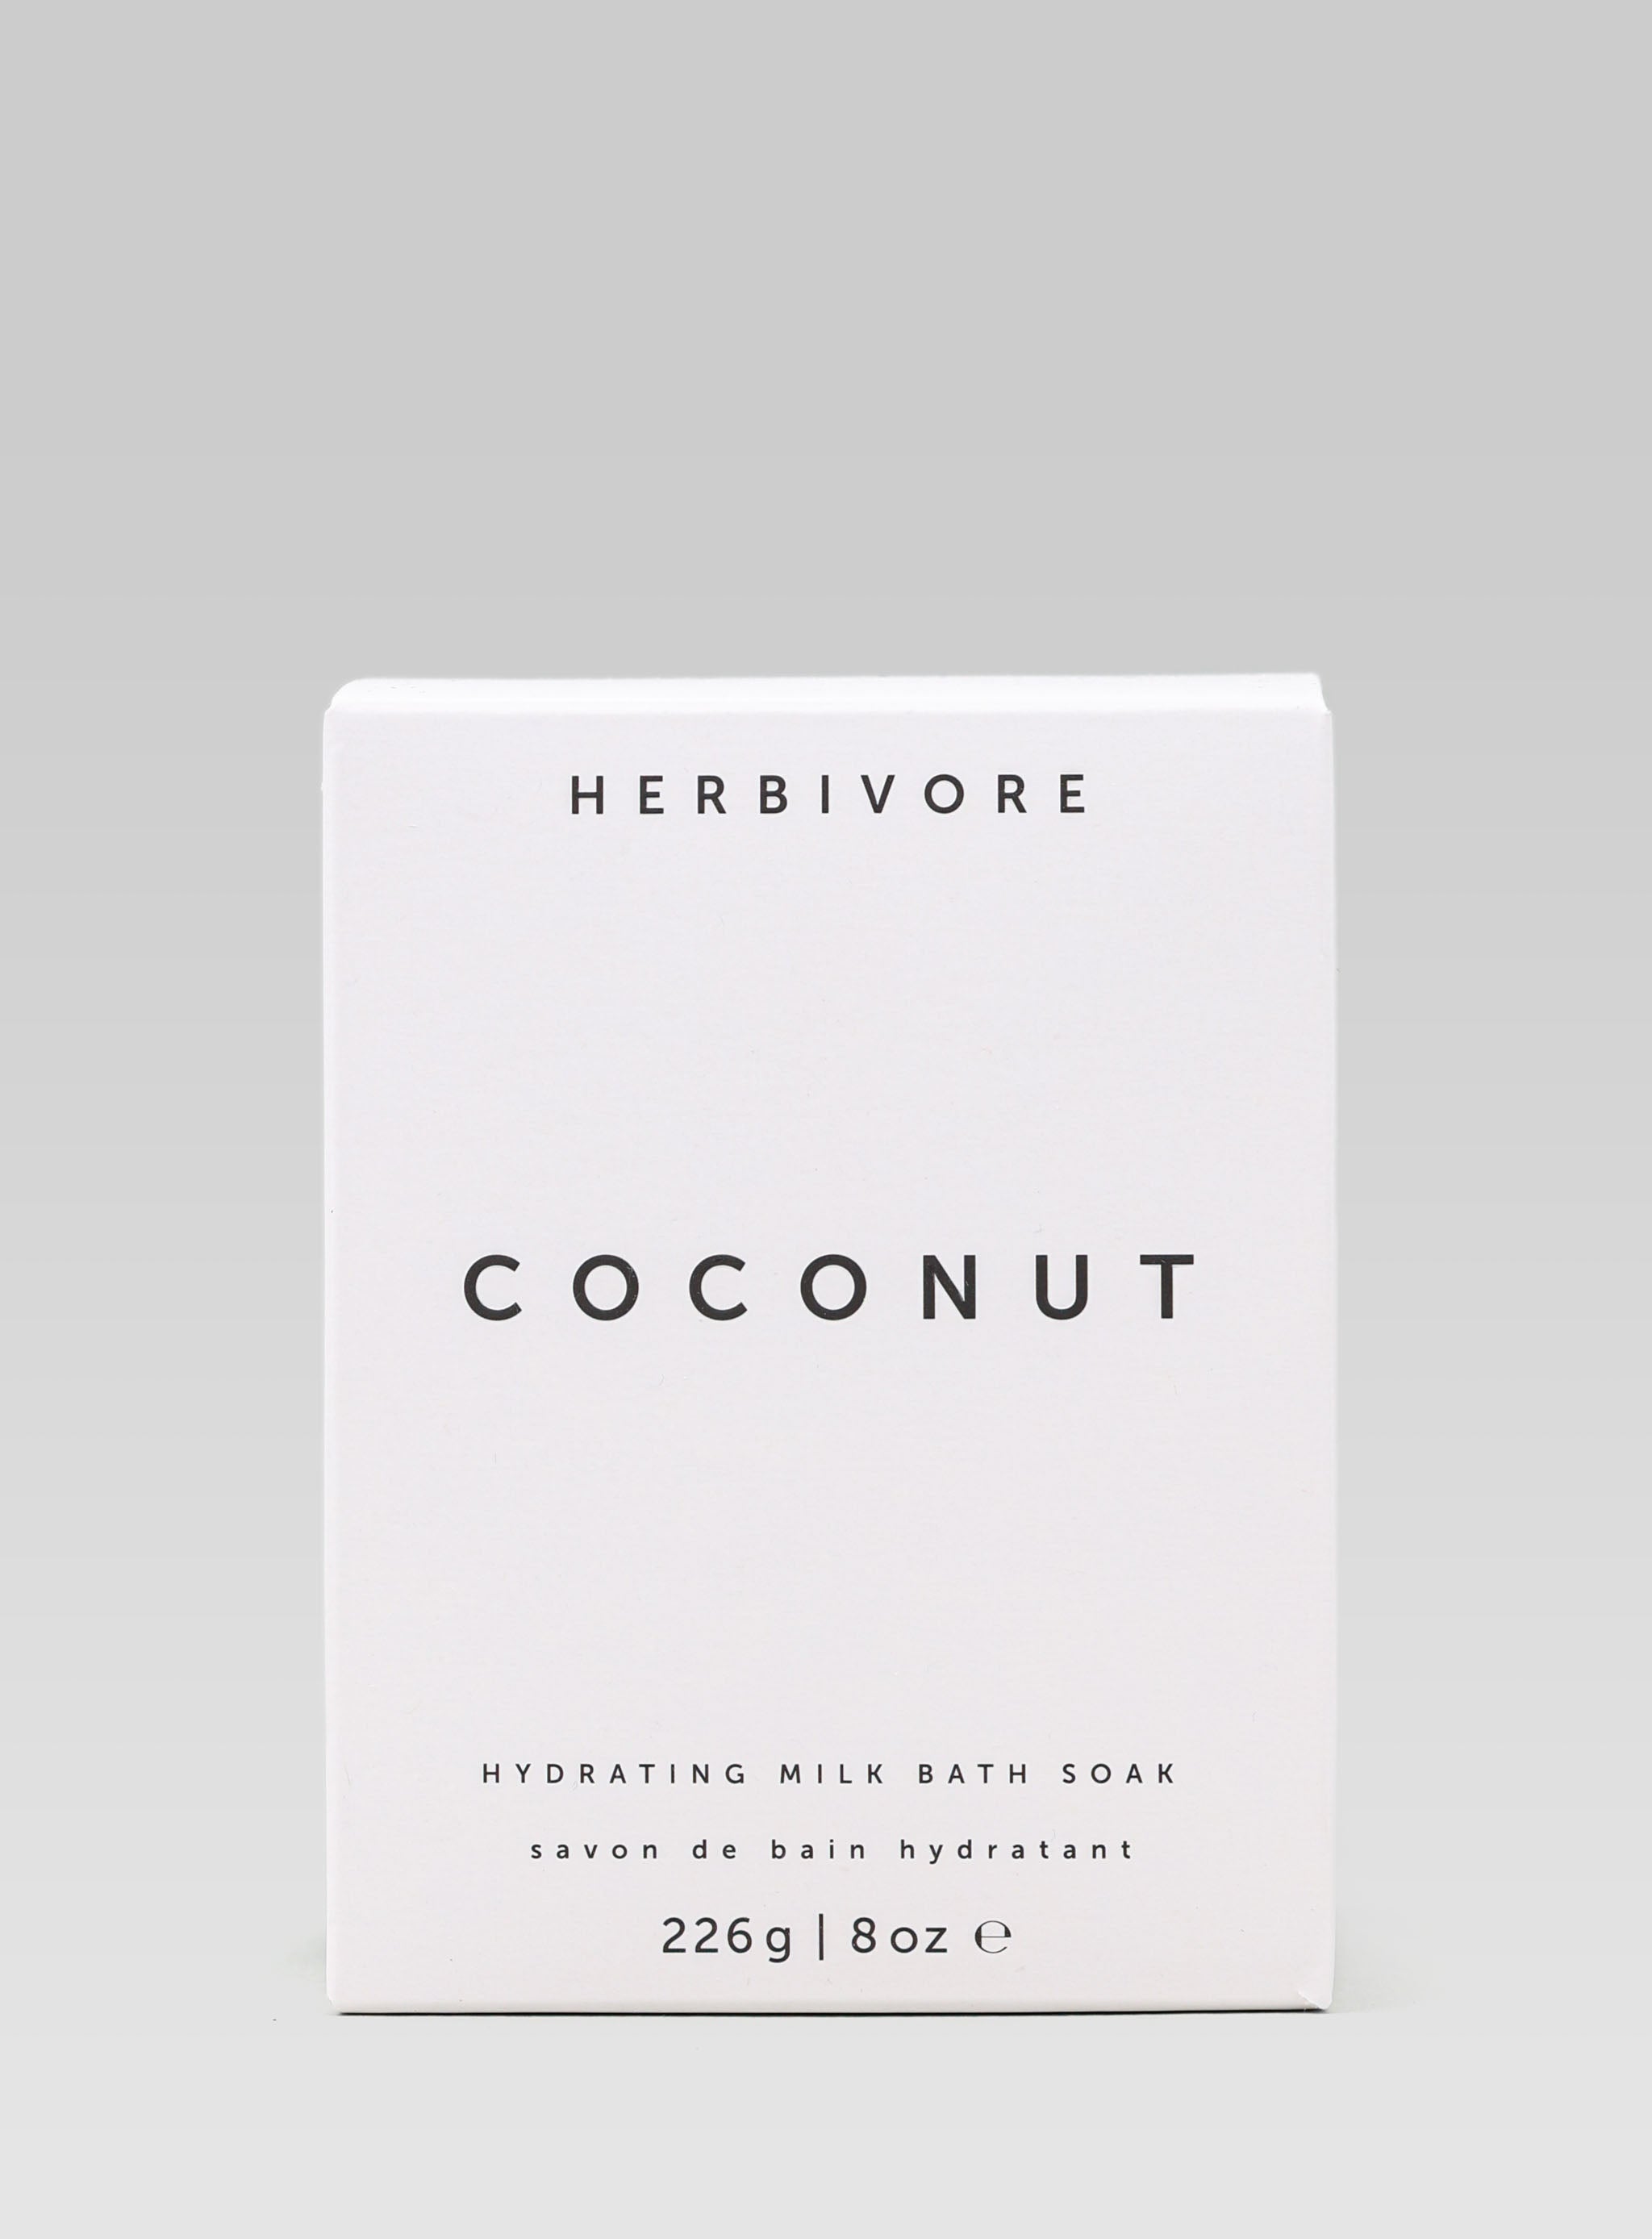 HERBIVORE BOTANICALS Coconut Milk Bath Soak product packaging 